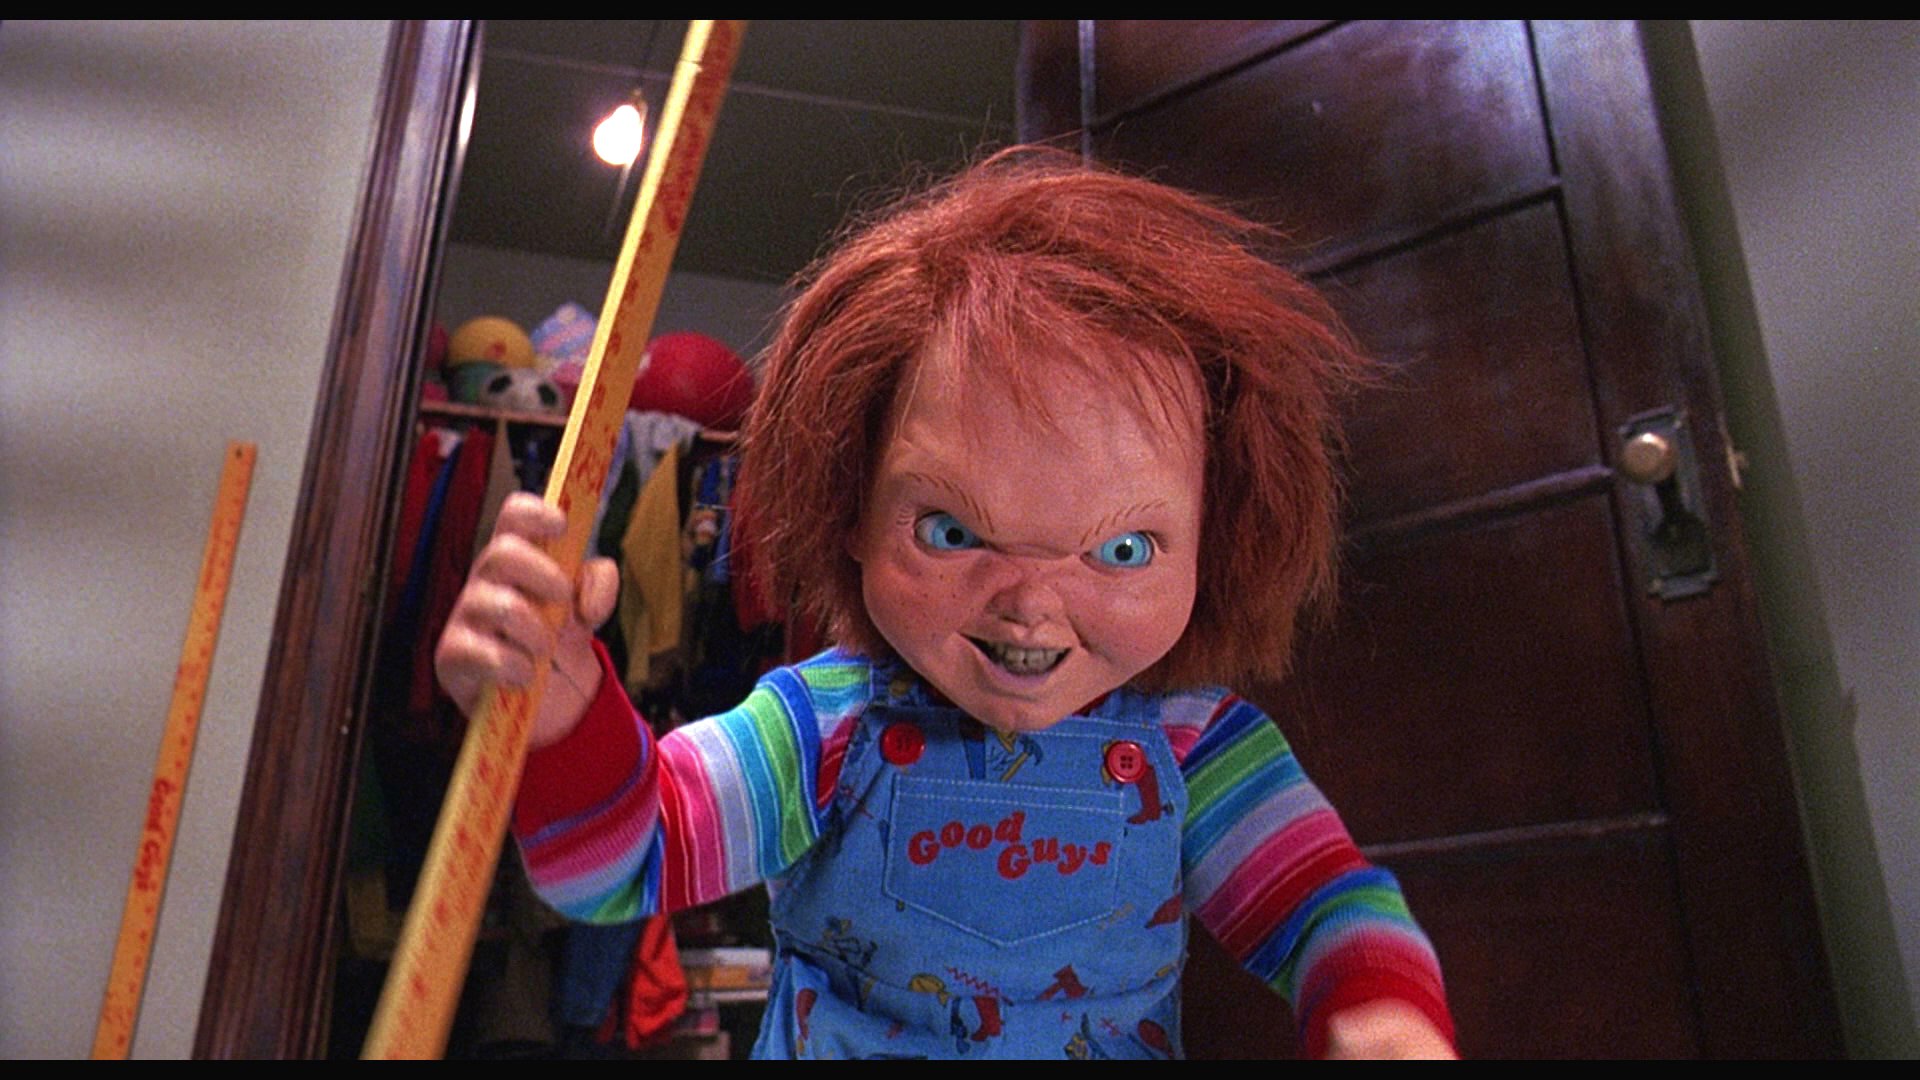 Childs Play Chucky Dark Horror Creepy Scary Wallpaper